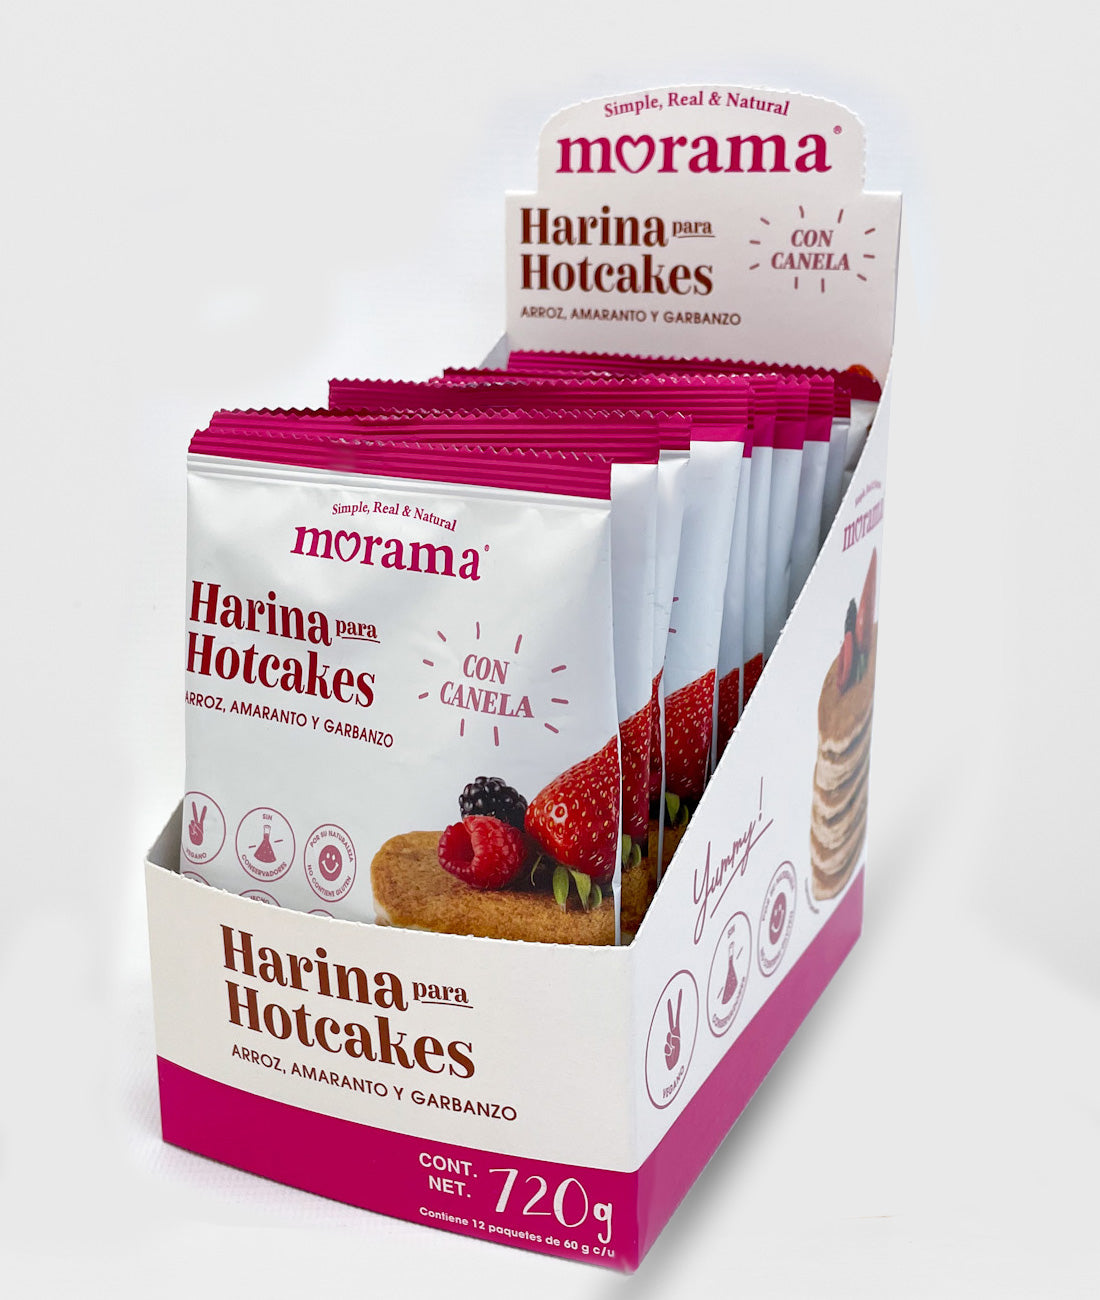 Harina para Hotcakes 12 pack de 60 g